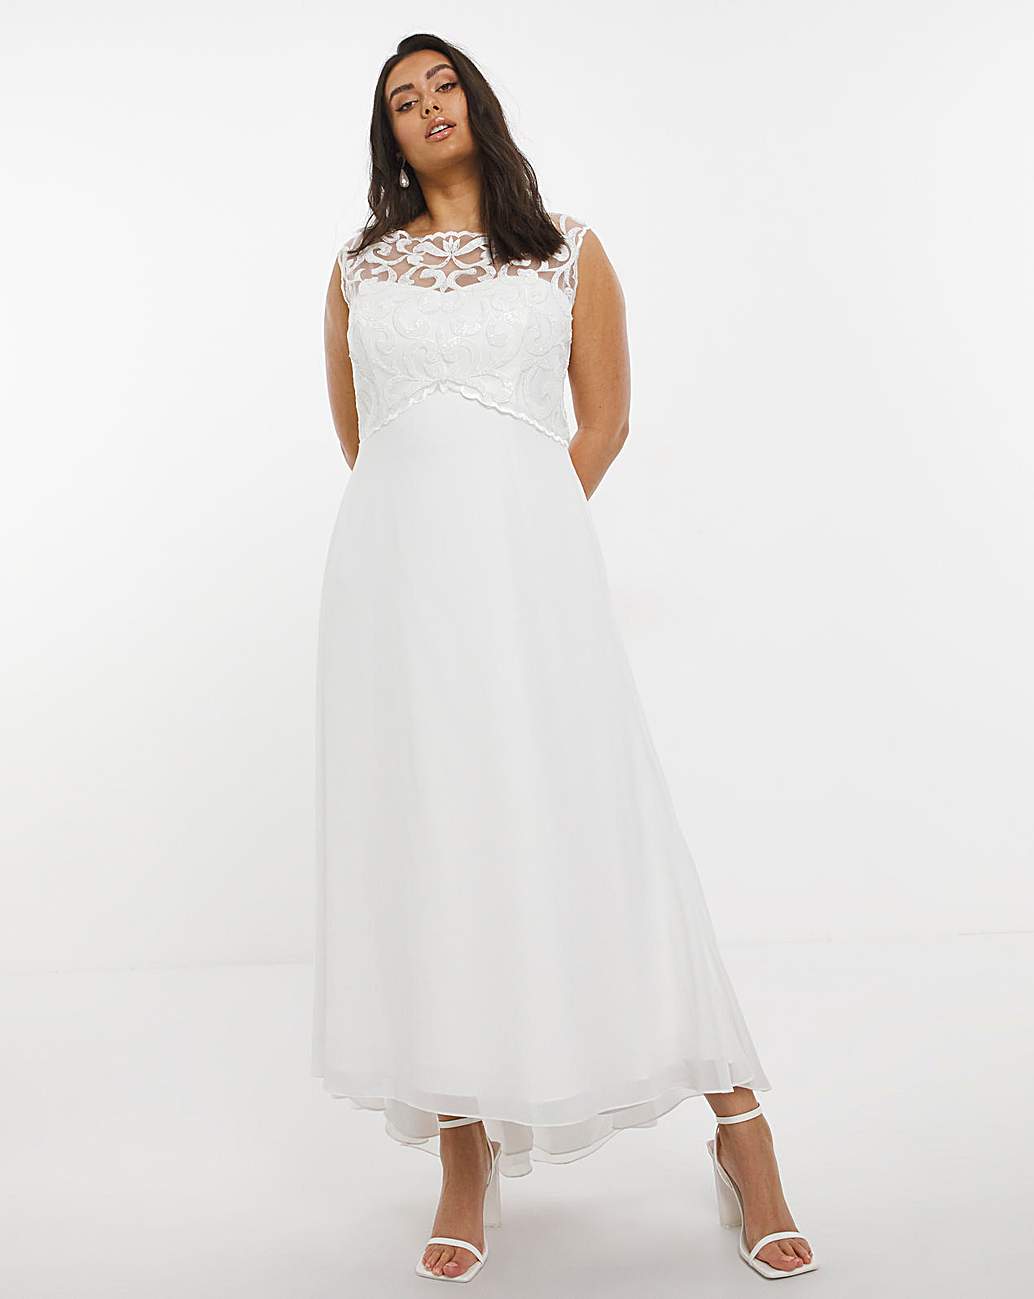 Joanna Hope Wedding Dress | Simply Be